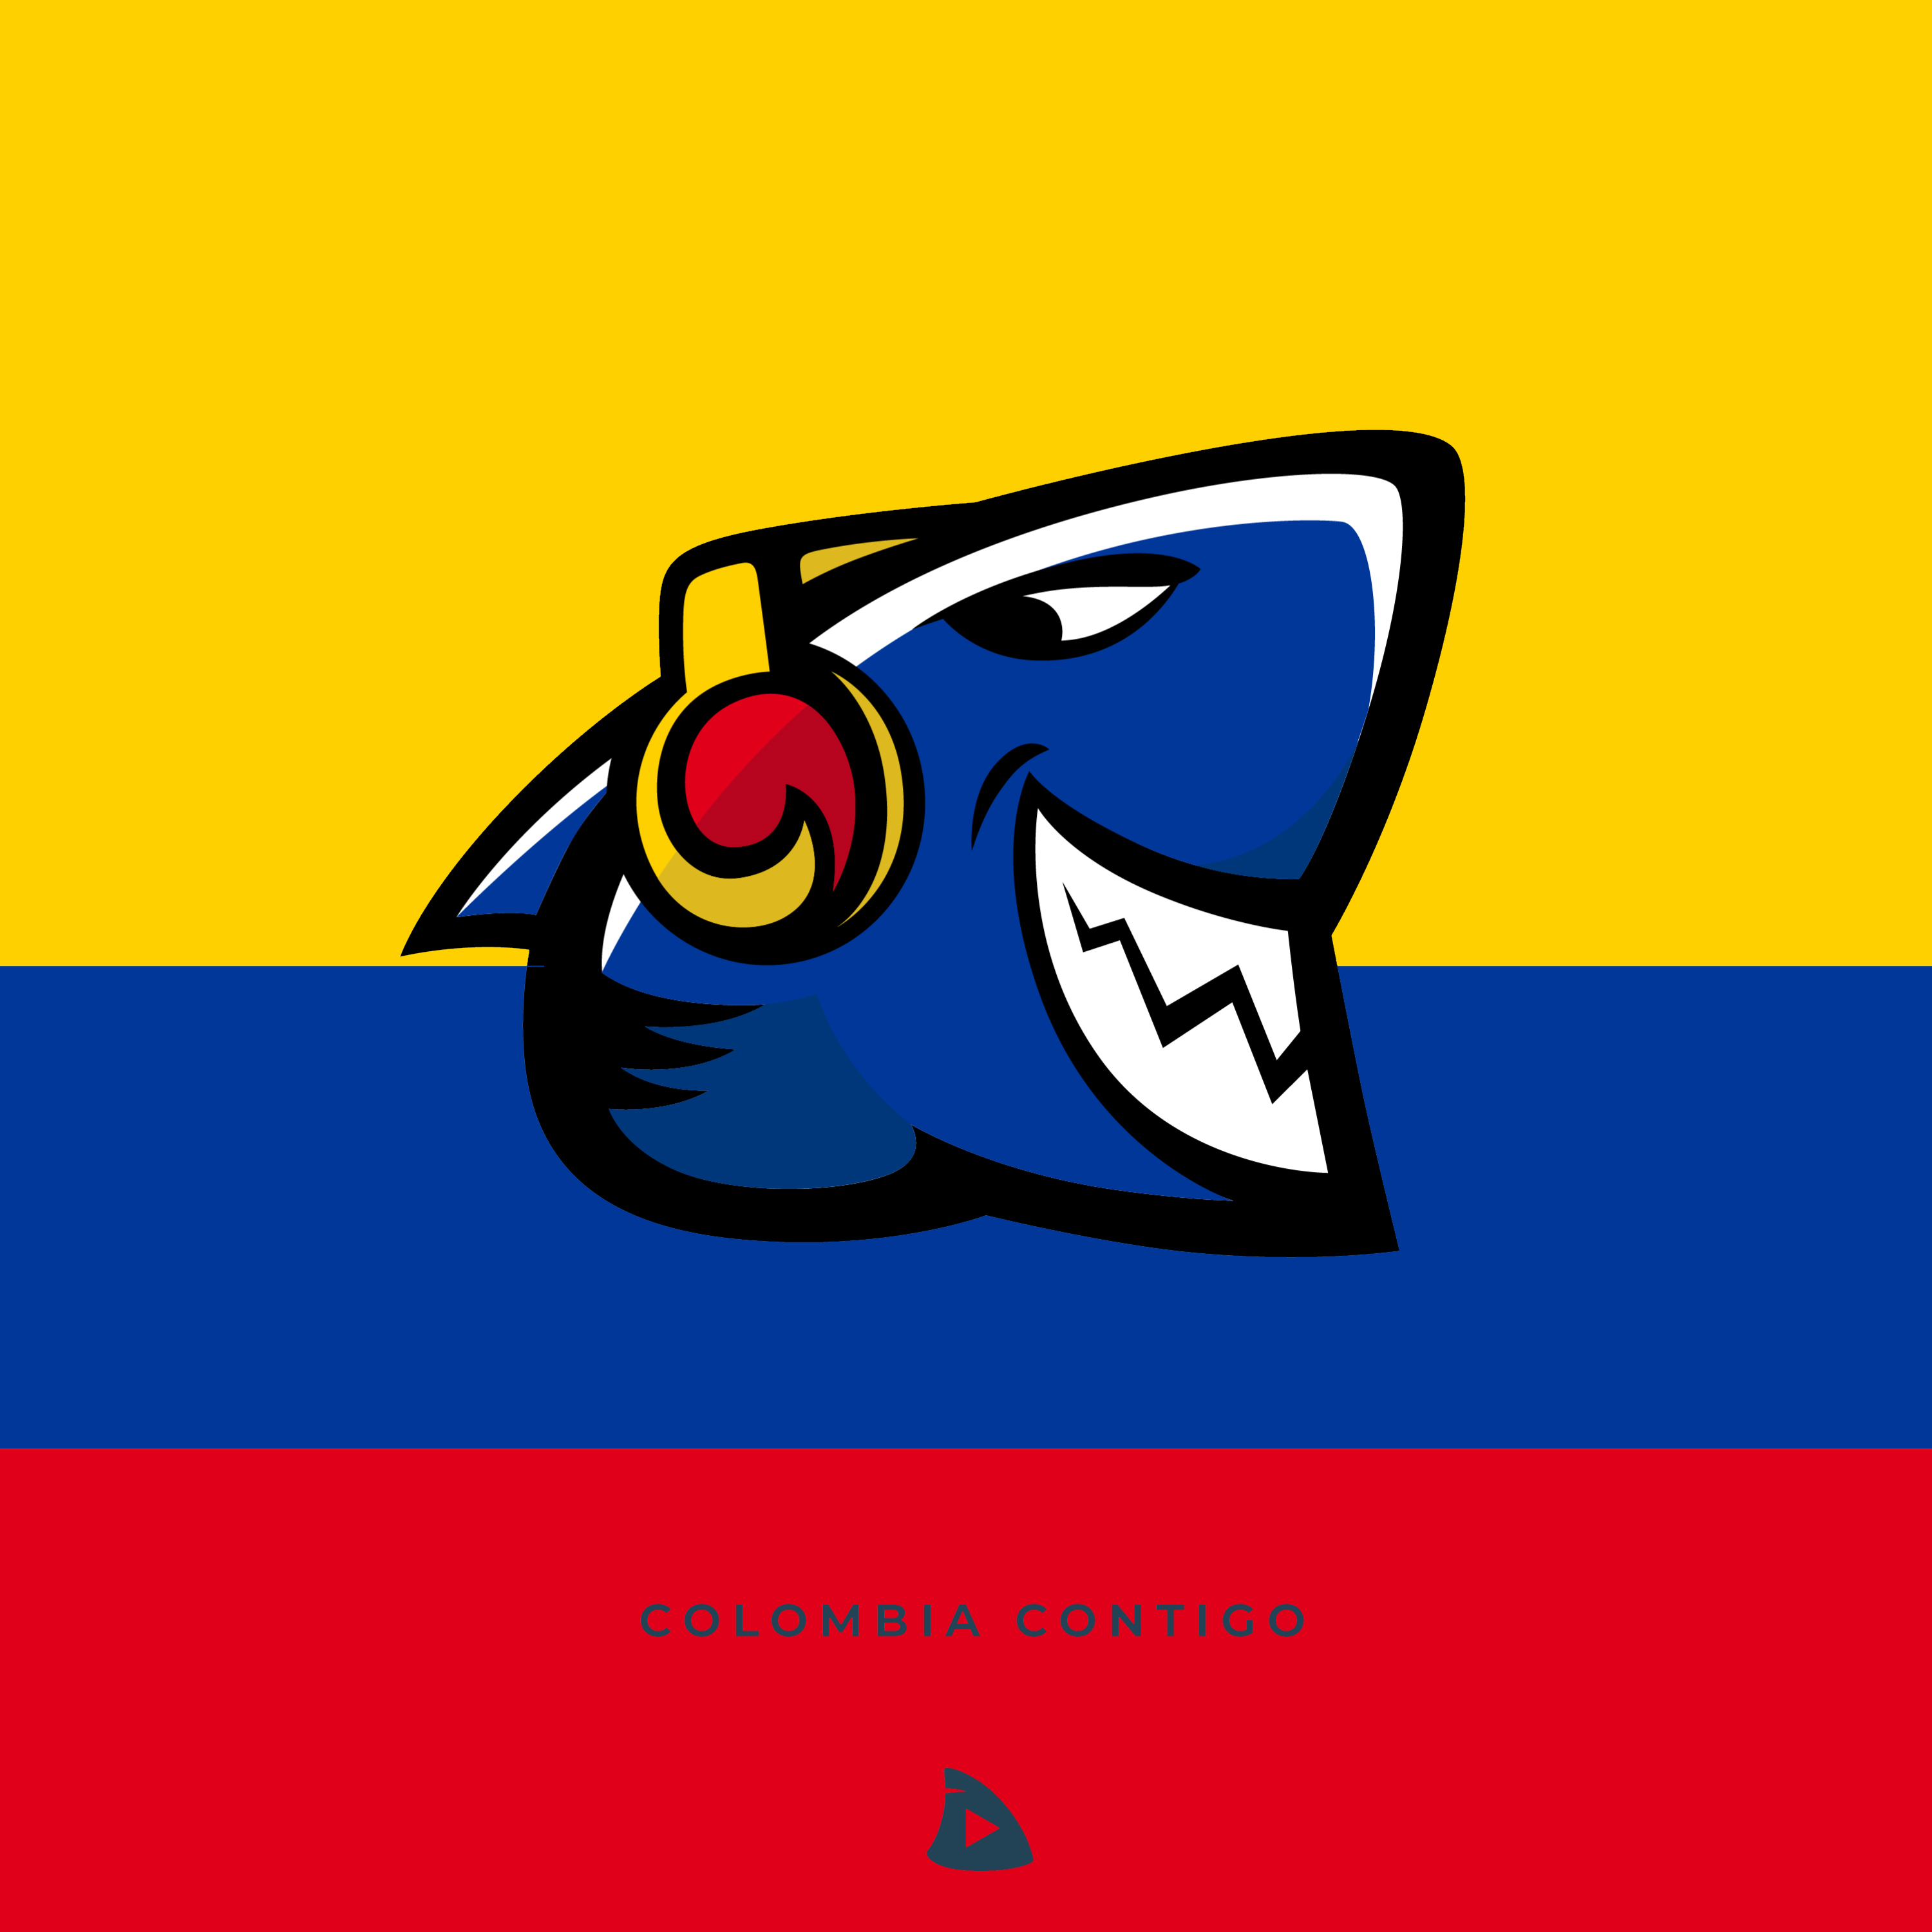 Colombia Contigo